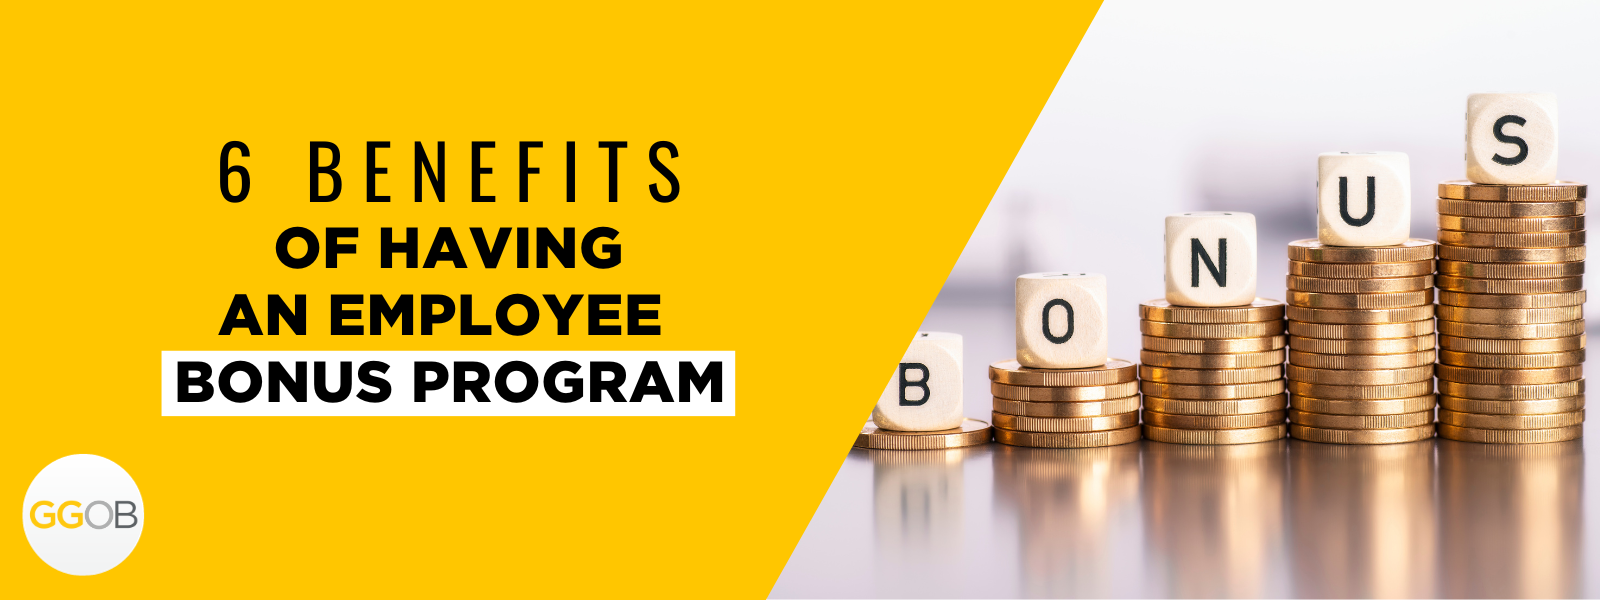 6 Benefits of Having an Employee Bonus Program